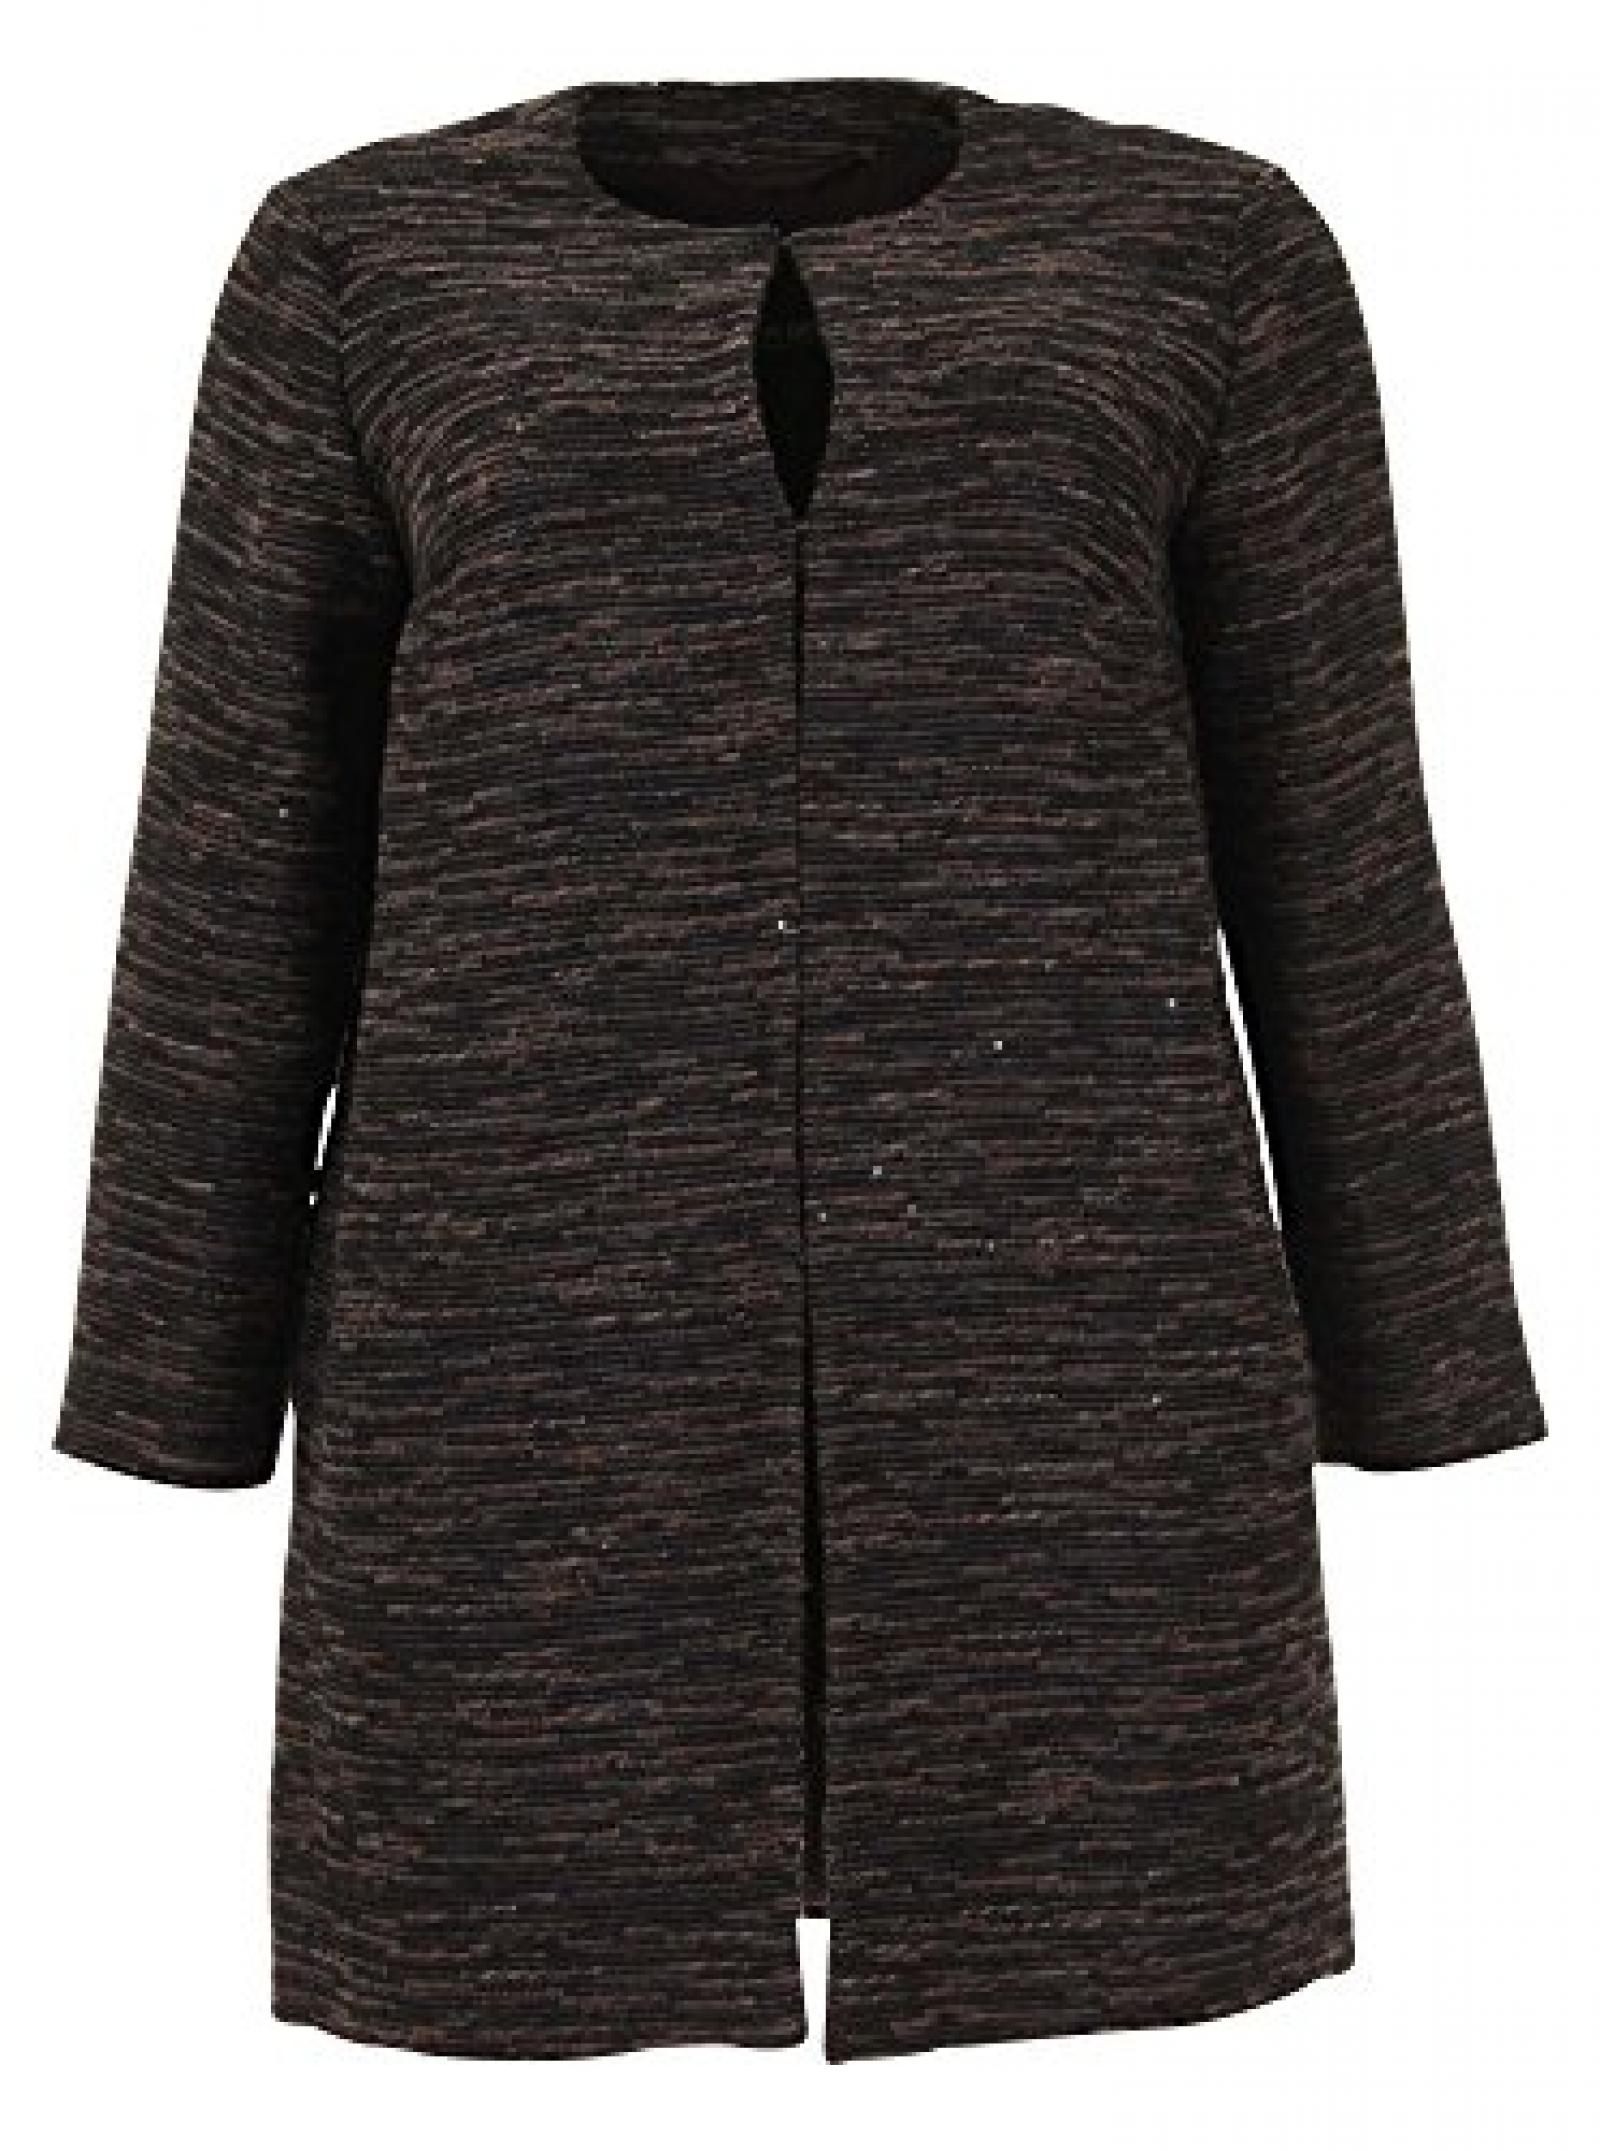 Marina Rinaldi - Damen - braune Jacke mit schwarzen Pailetten 